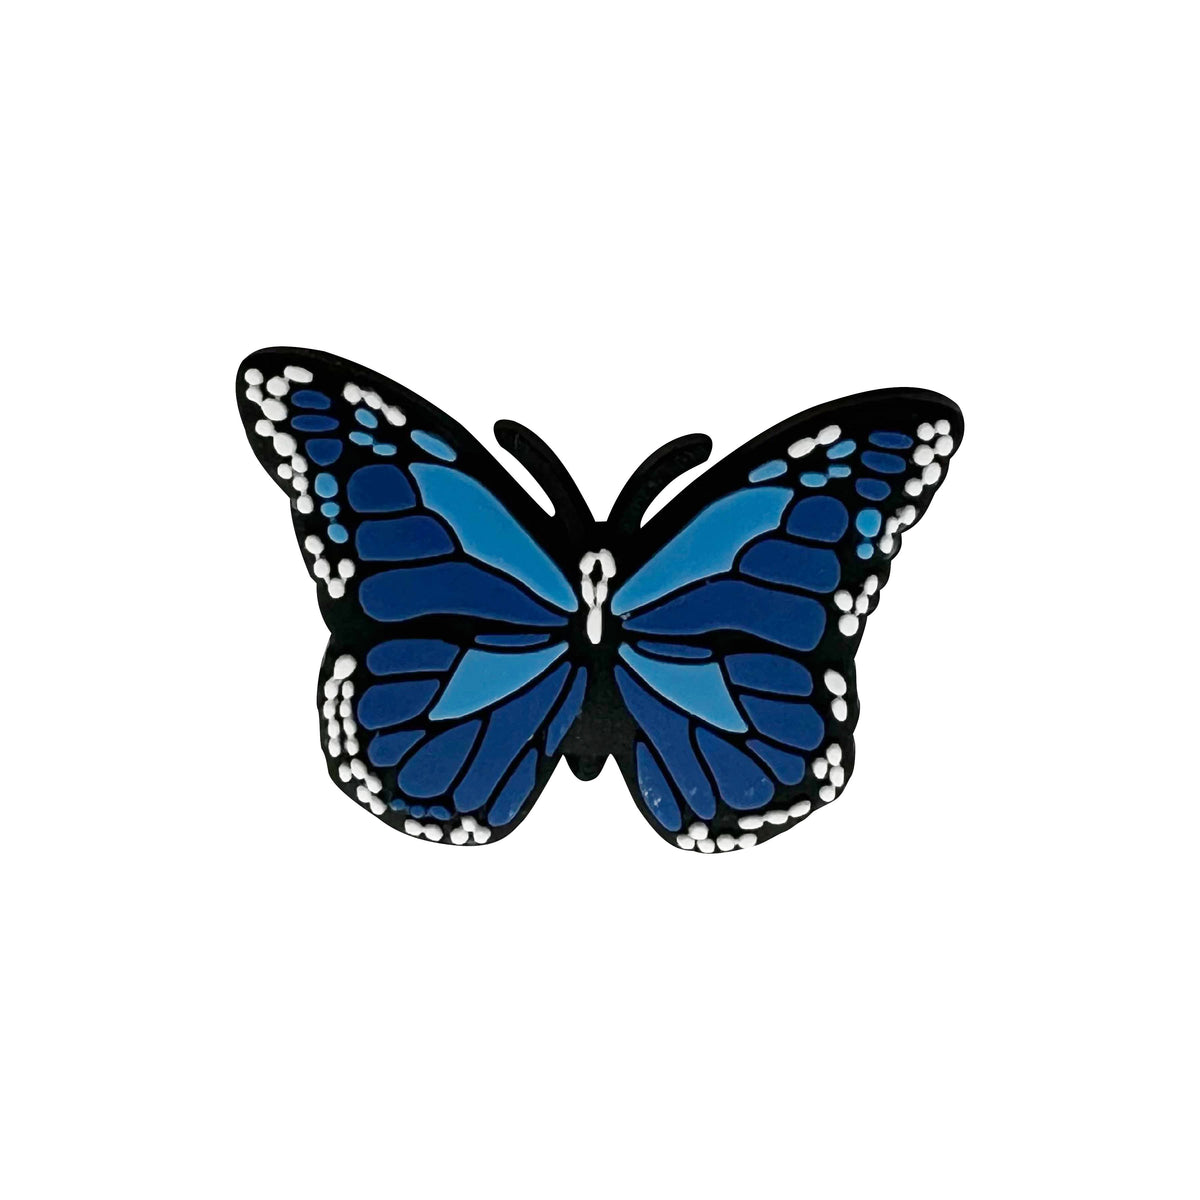 meSNAPS 3D Butterfly